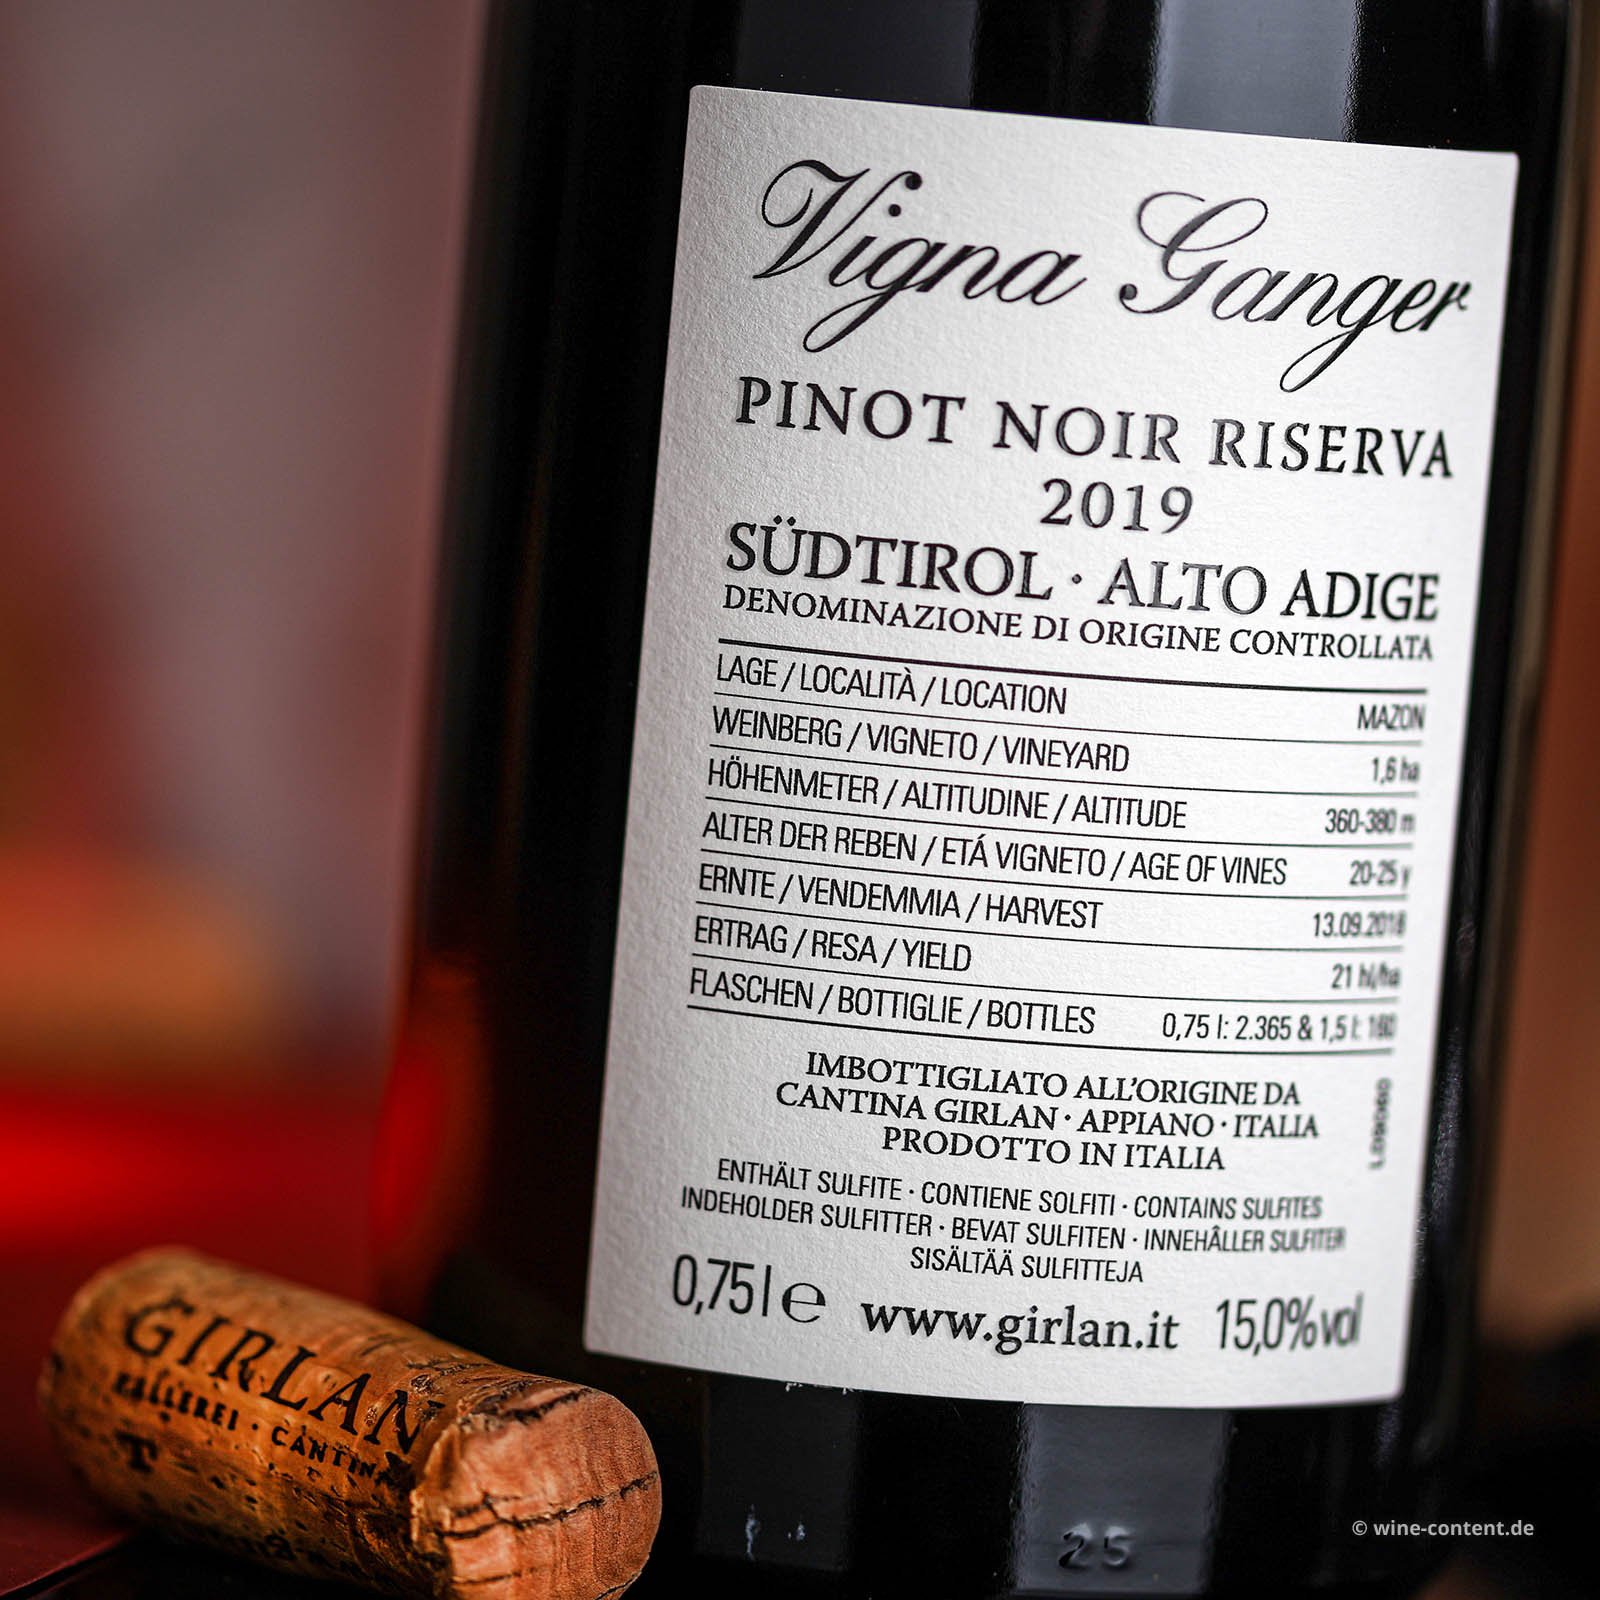 Pinot Noir Riserva 2019 Vigna Ganger 